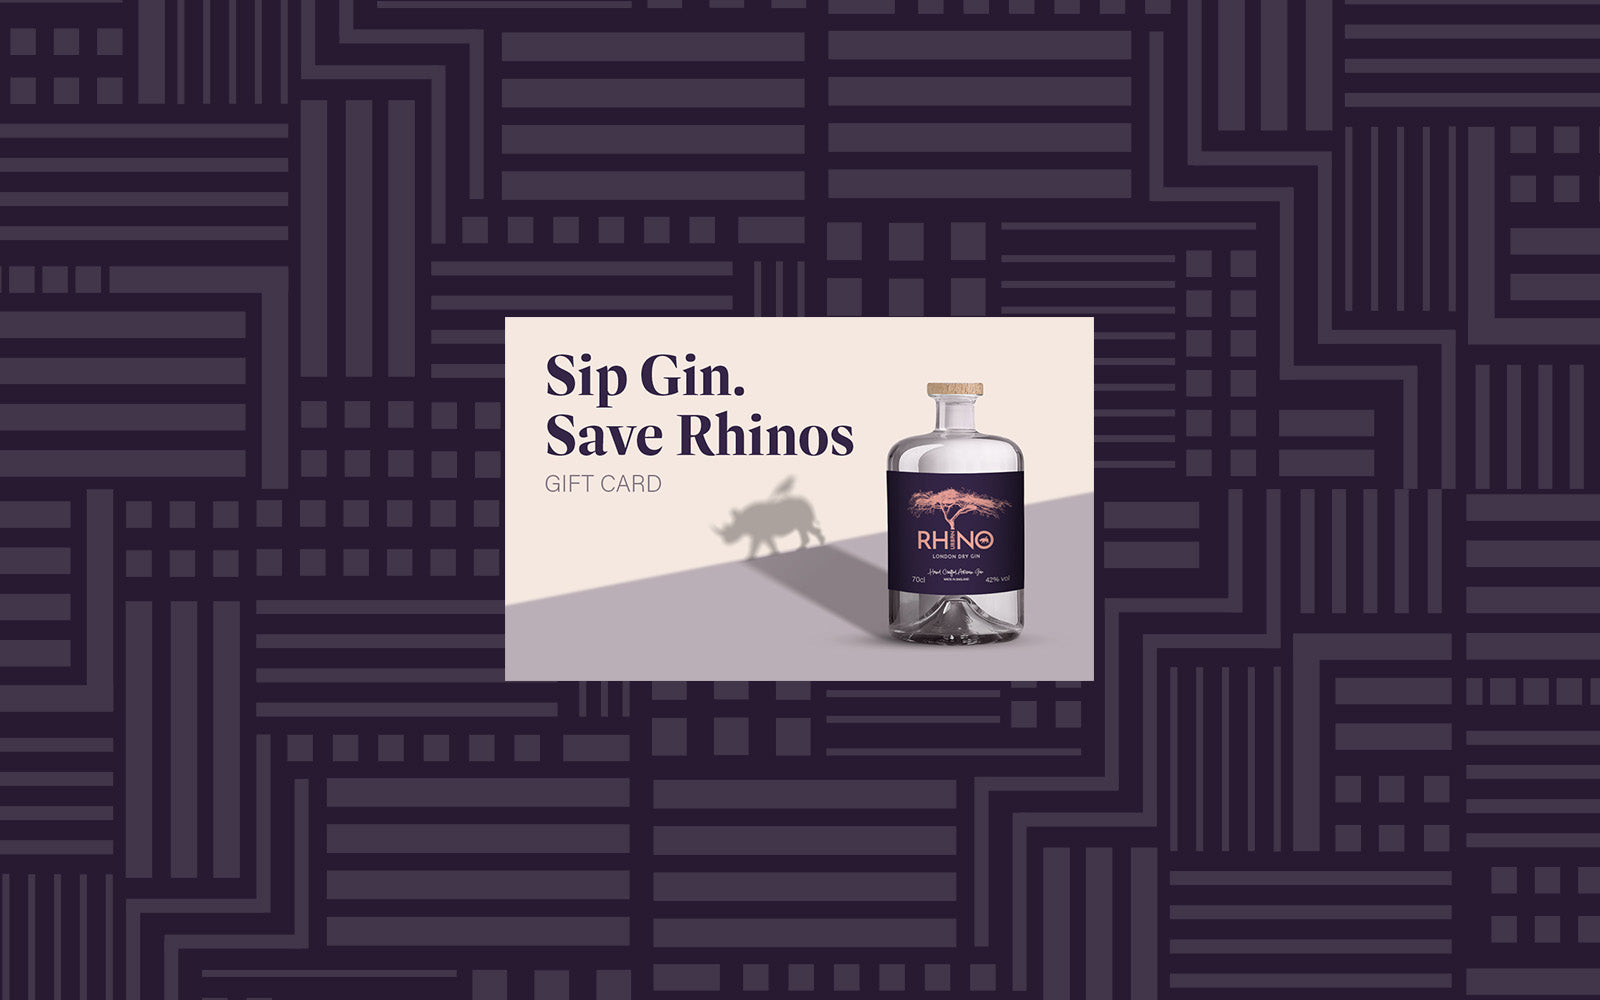 Gift cards for Urban Rhino gin